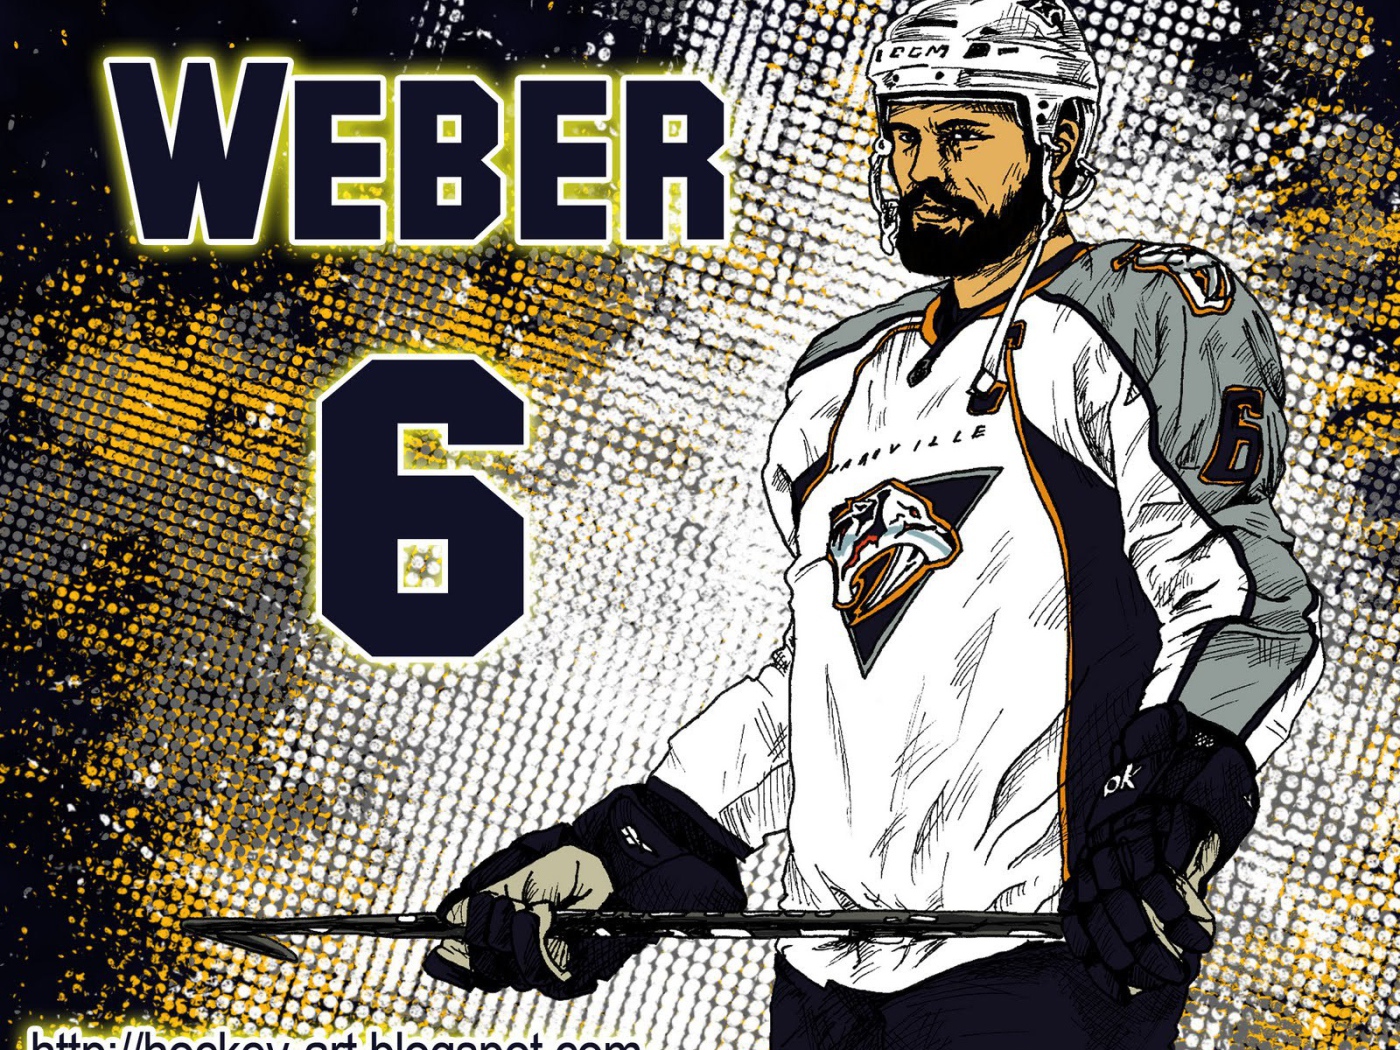 Hockey player SHEA Weber on ice